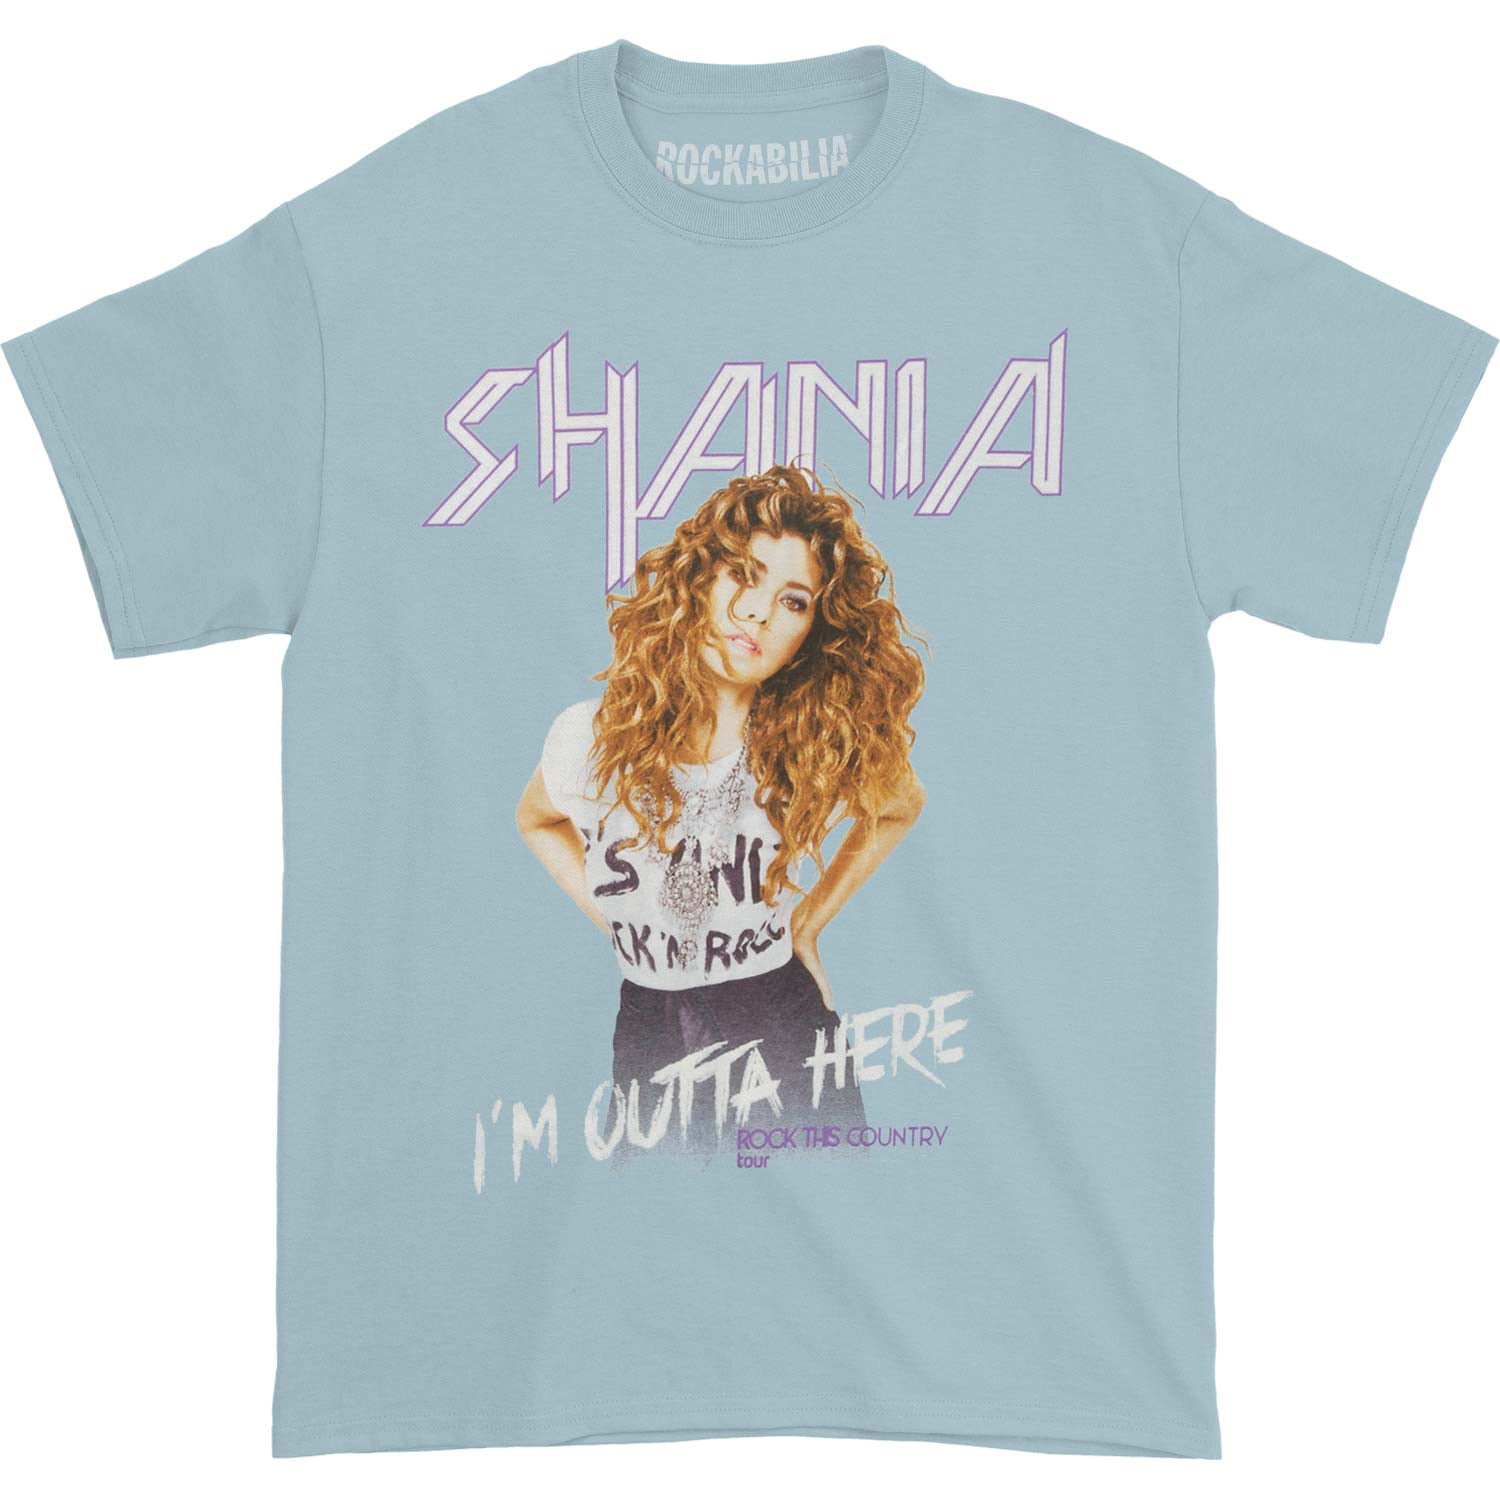 Shania Twain with Snow Mens Classic Short Sleeve Music Band T-Shirts Shirt Black